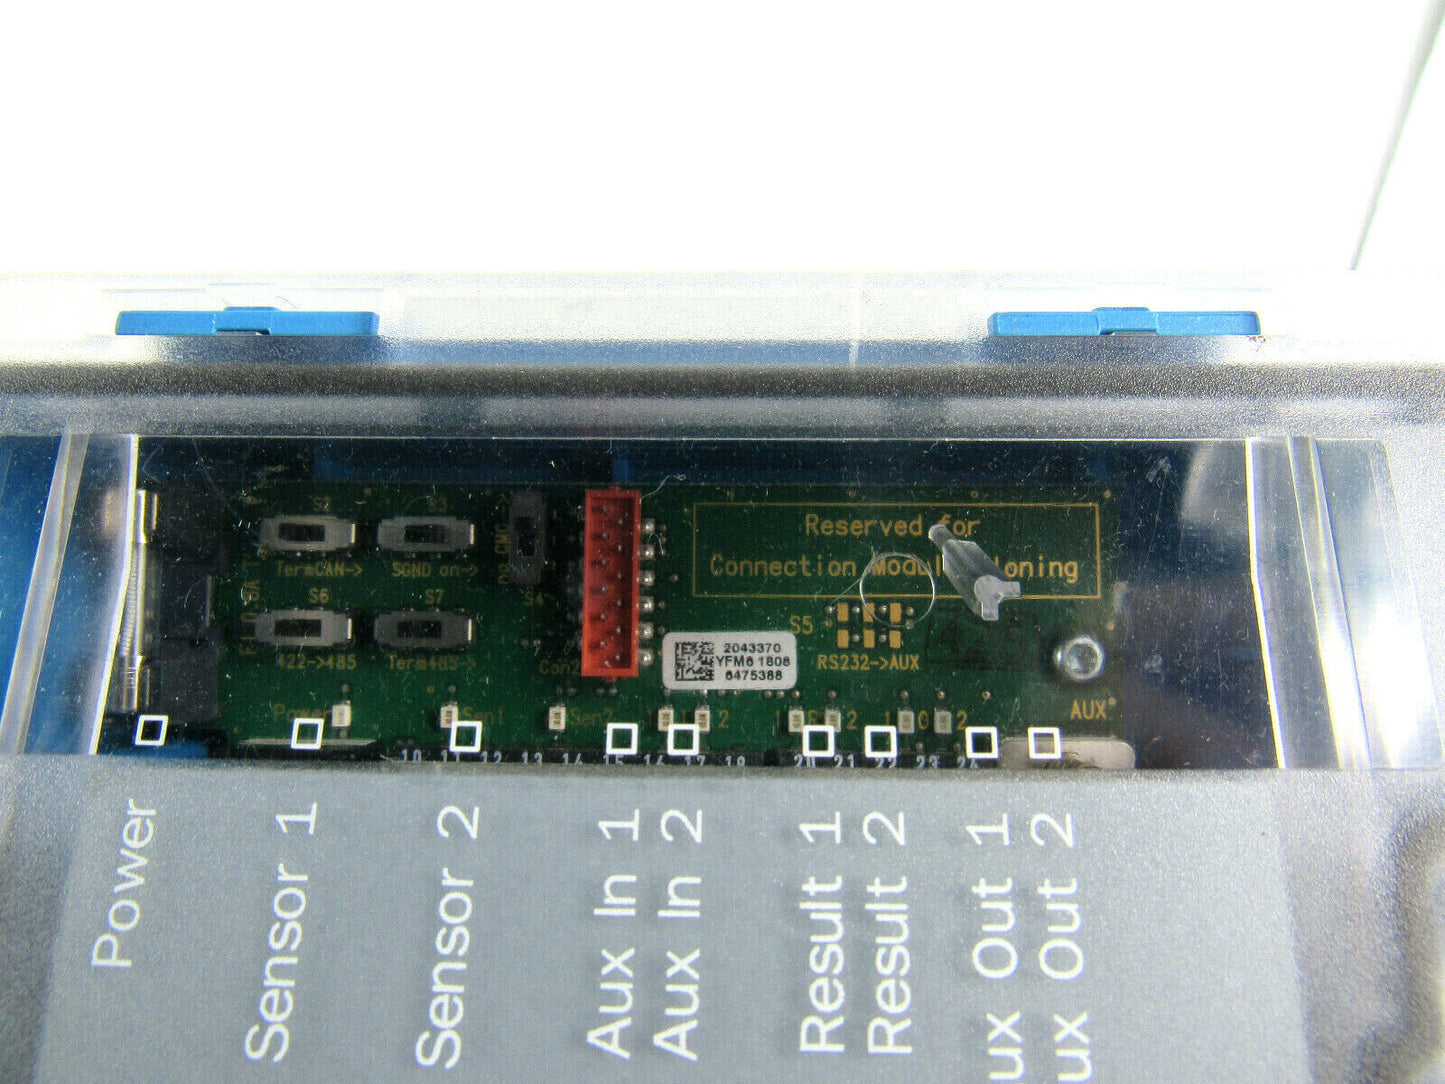 SICK CDB620-001 Connection Module, 10-30VDC, 1W, 2.4A